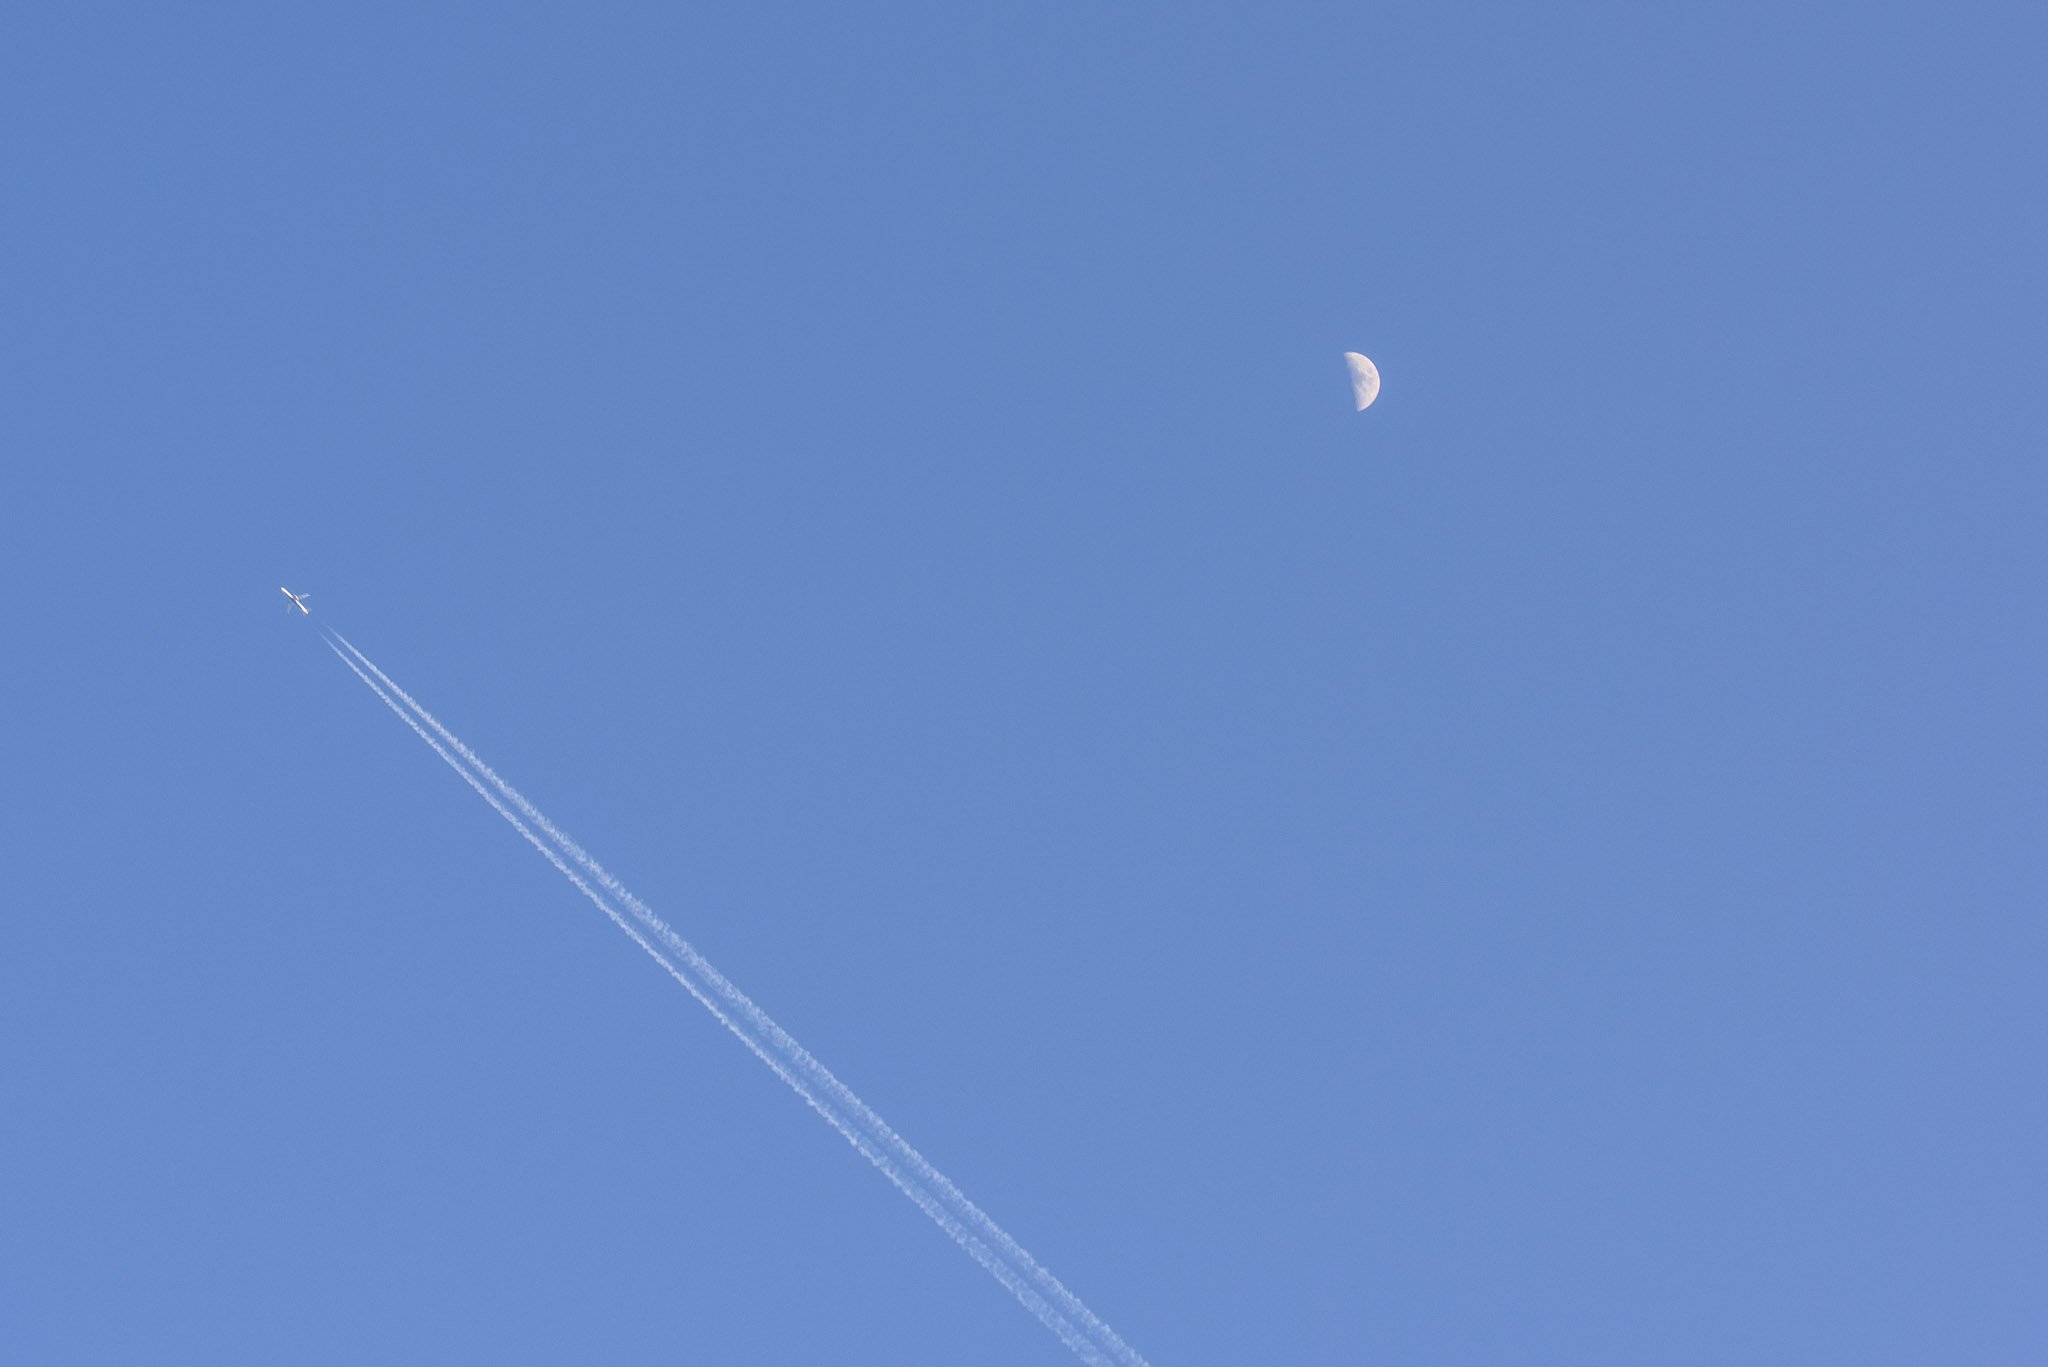 Plane moon and vapor trails